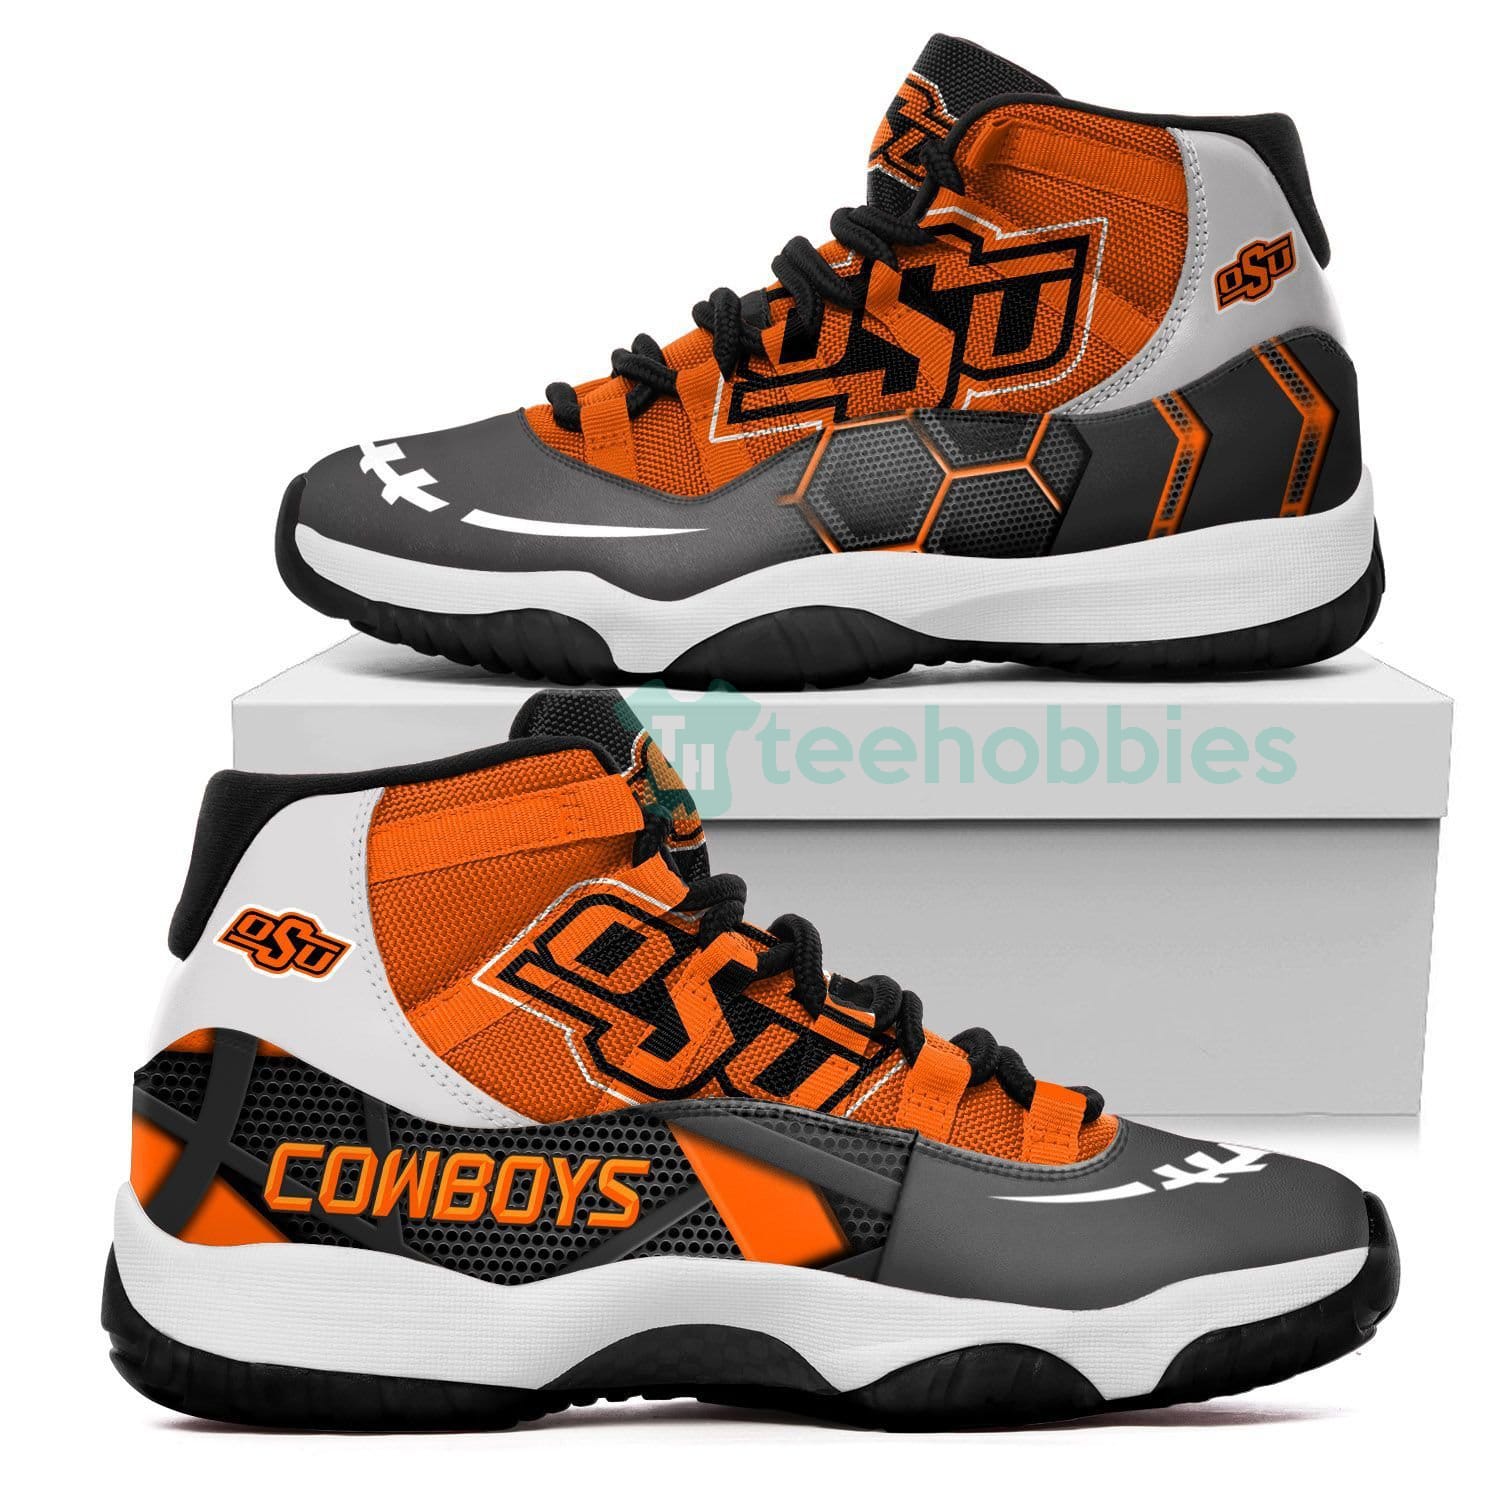 Oklahoma State Cowboys New Air Jordan 11 Shoes Fans